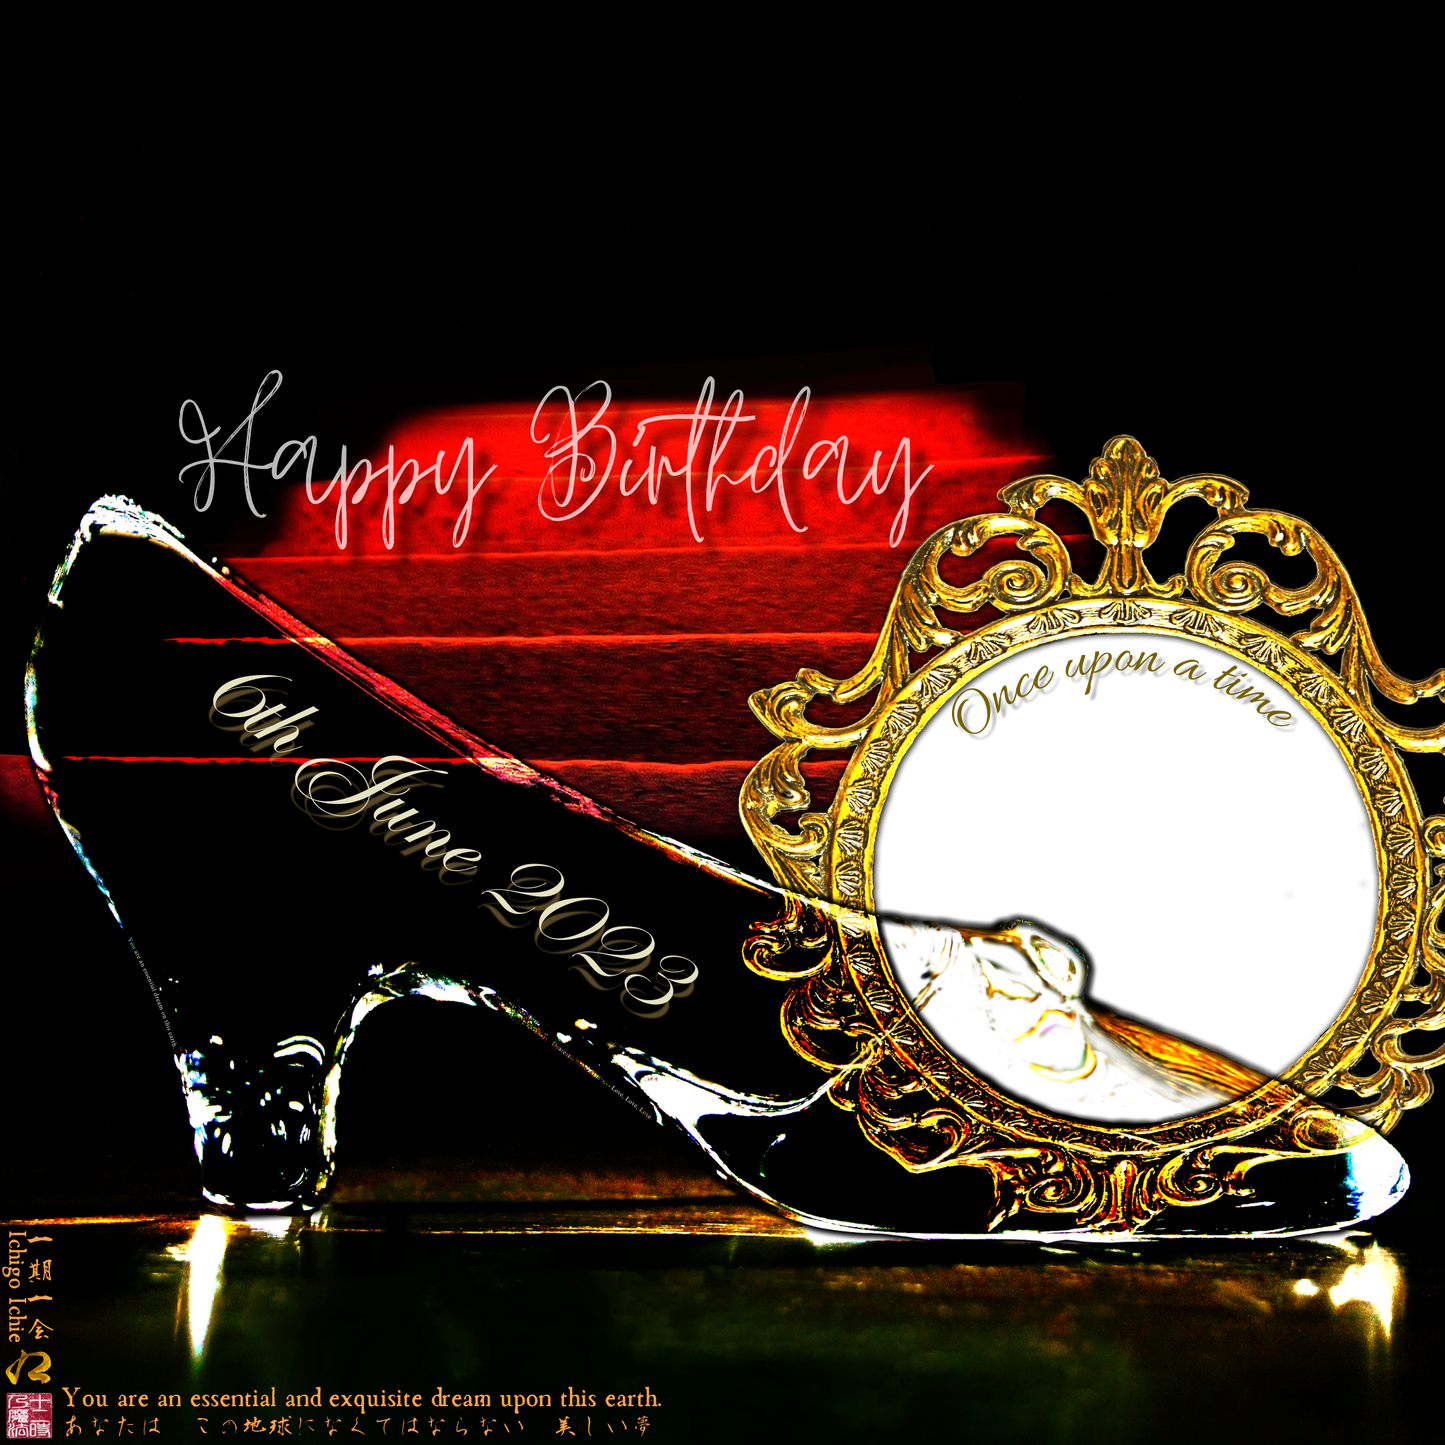 Happy Birthday Glass Slipper "Ichigo Ichie" 6th June 2023 the Right (1-of-1) NFT Art